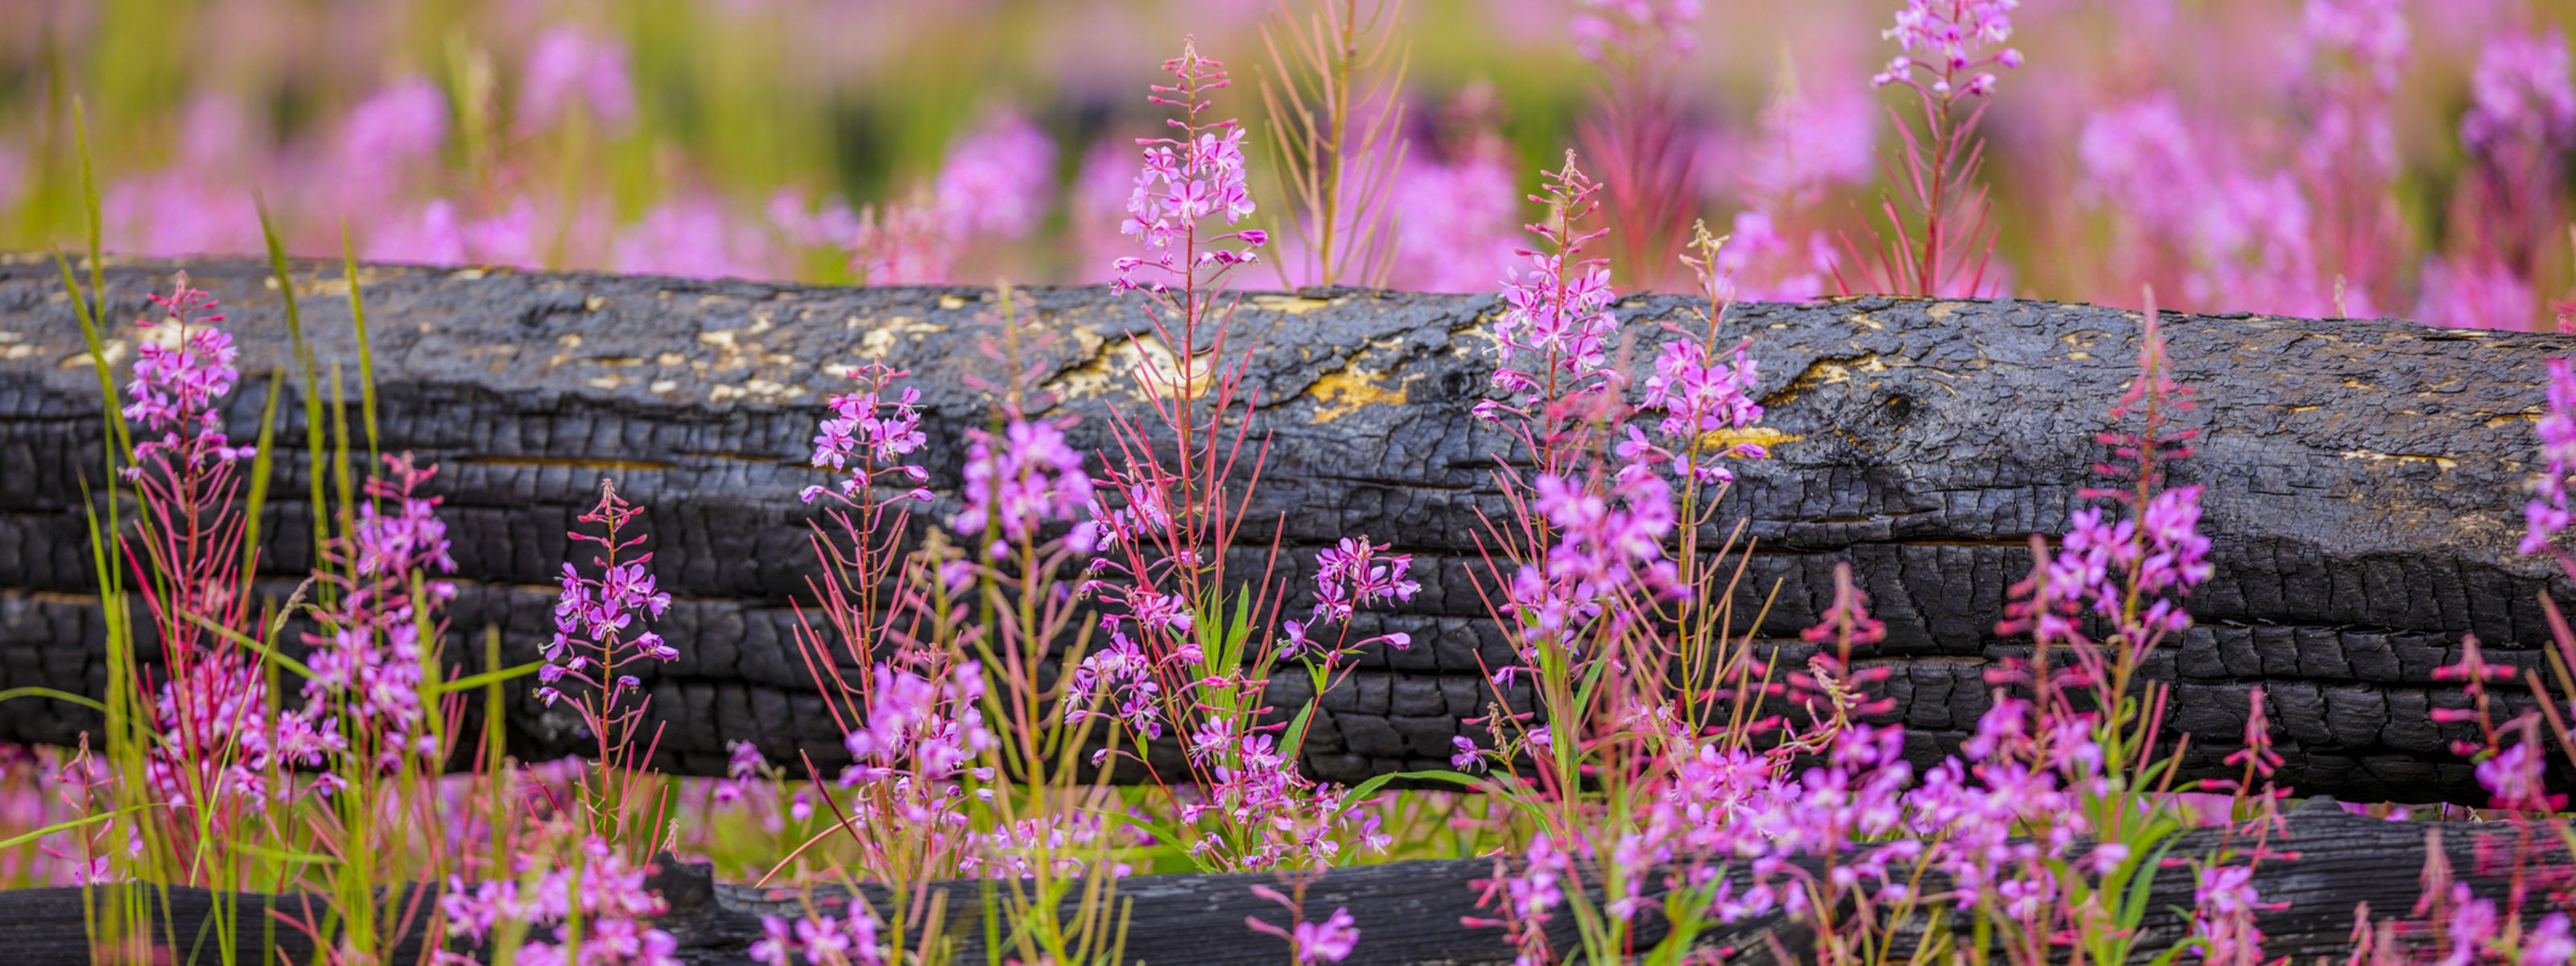 Pink wildflowers grow in a grass field.